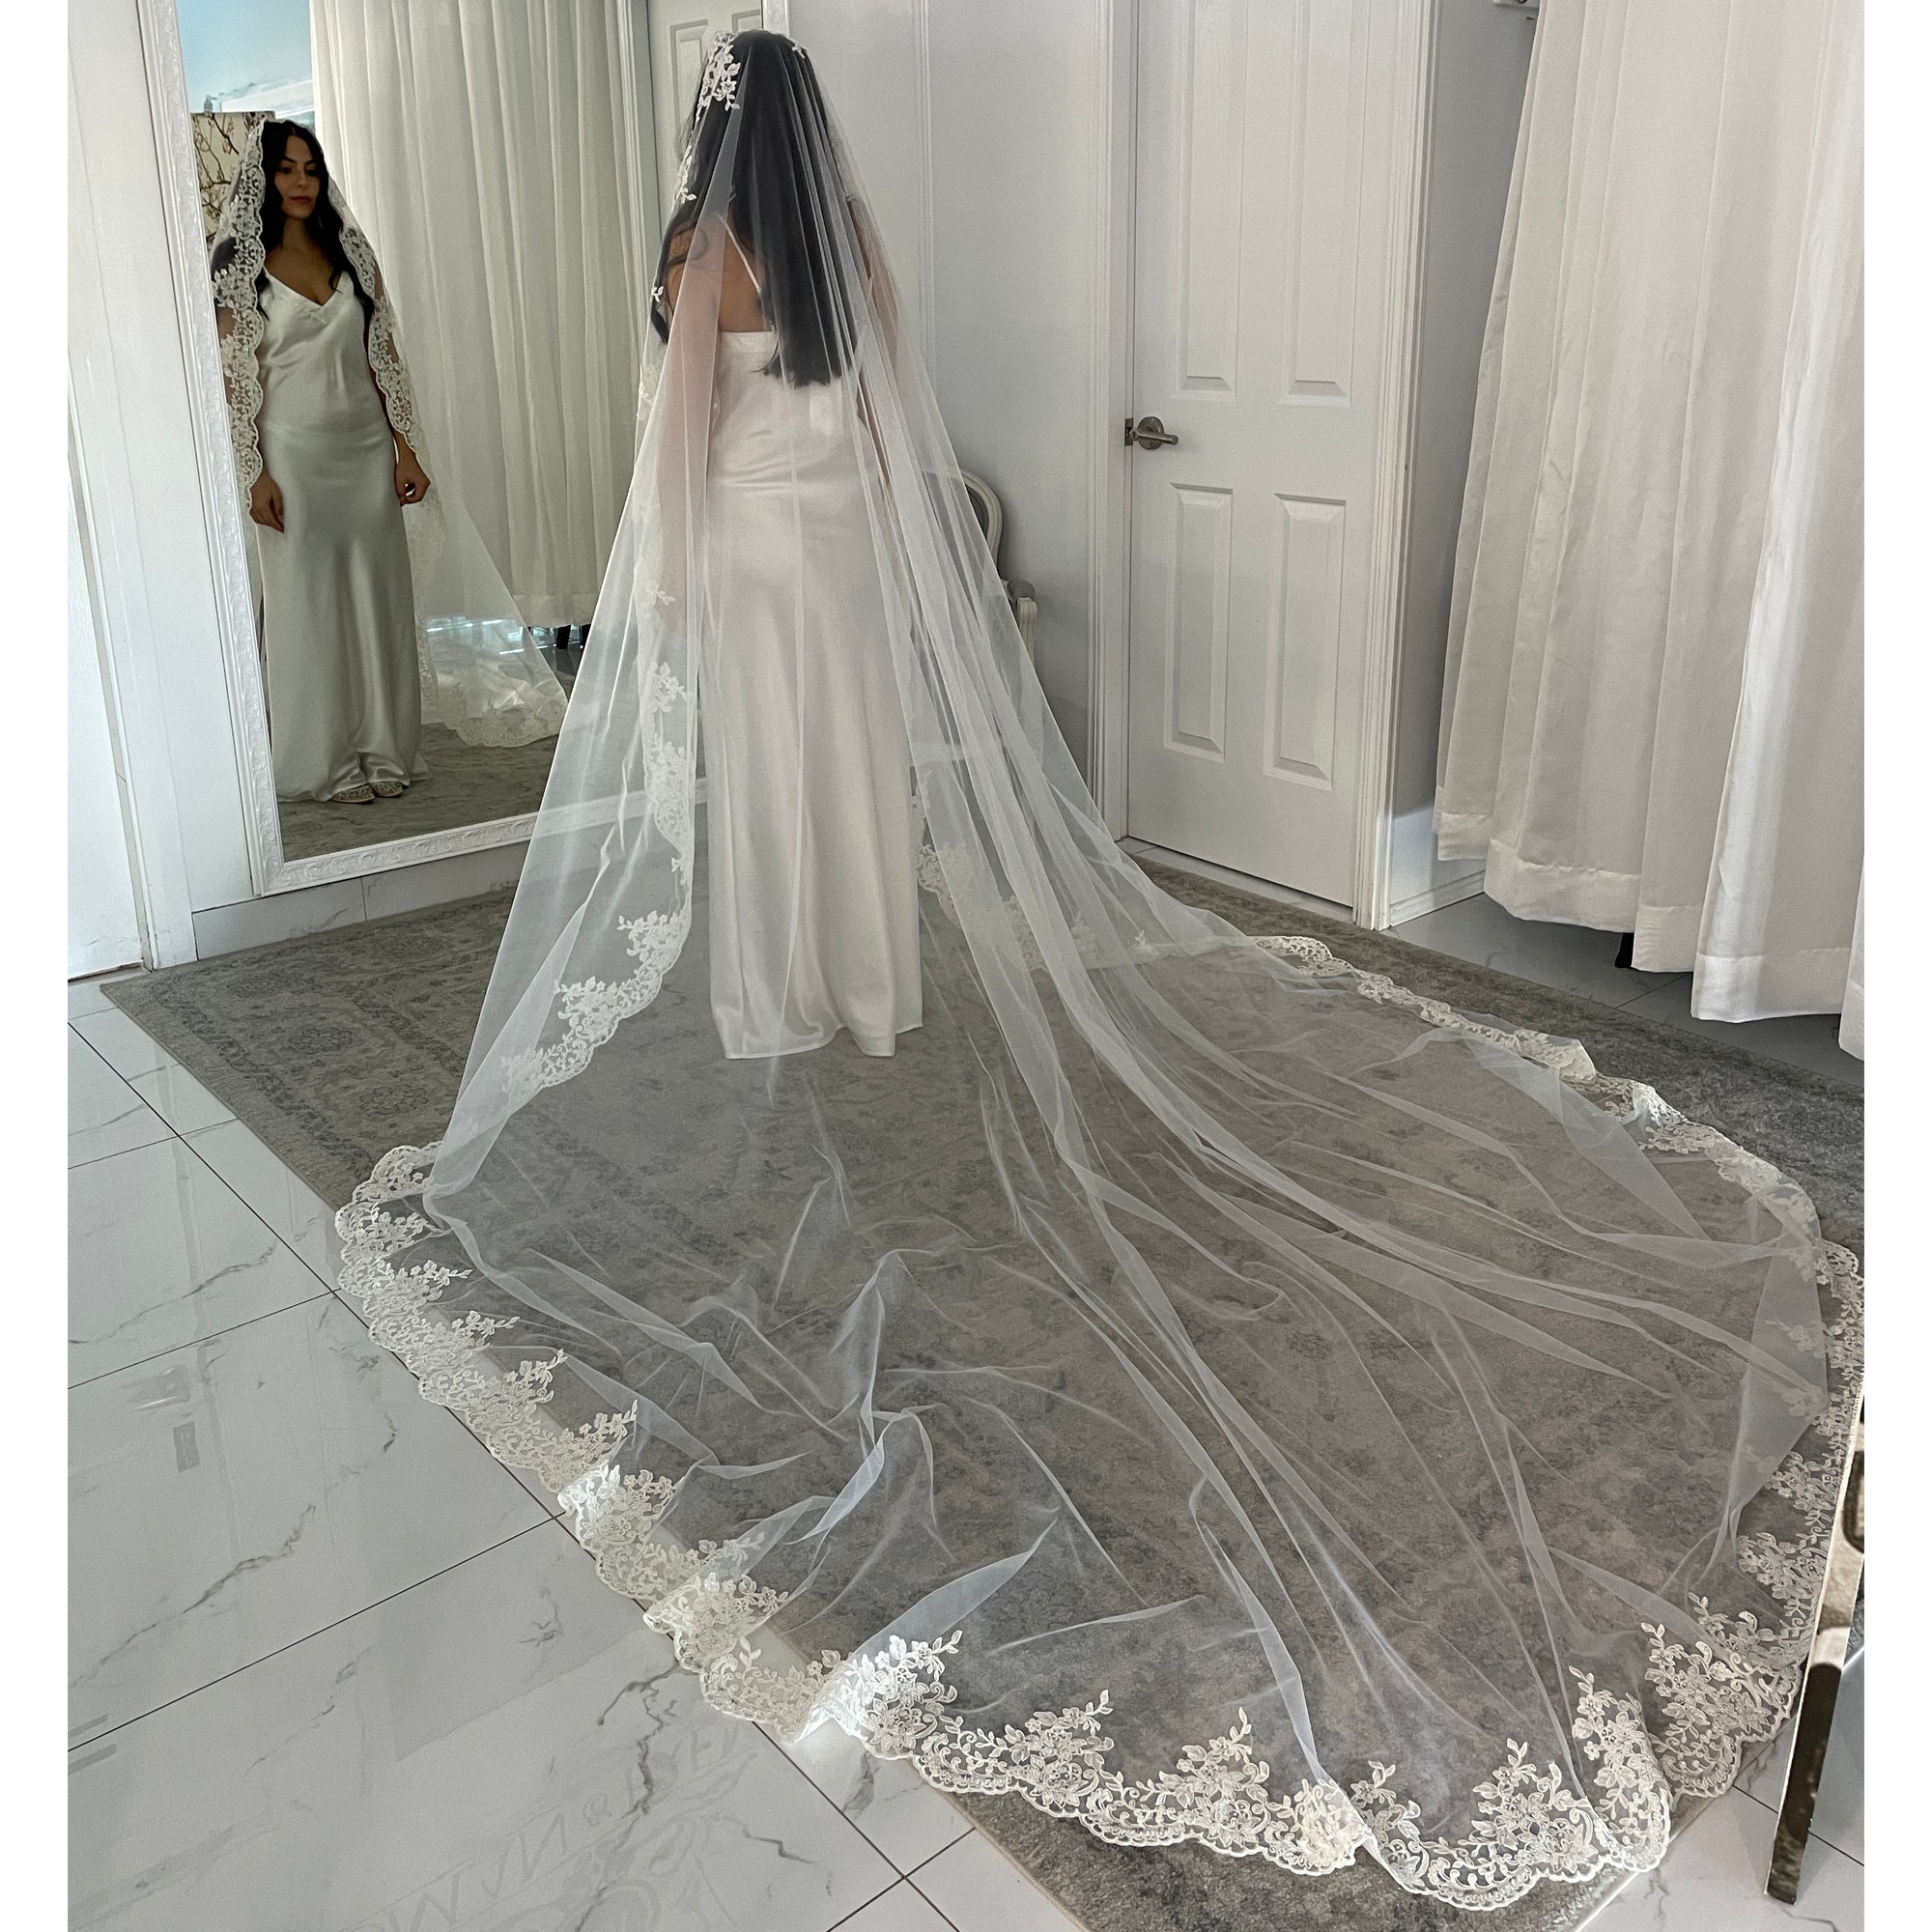 Stylish Wedding Veils for Every Bride's Style